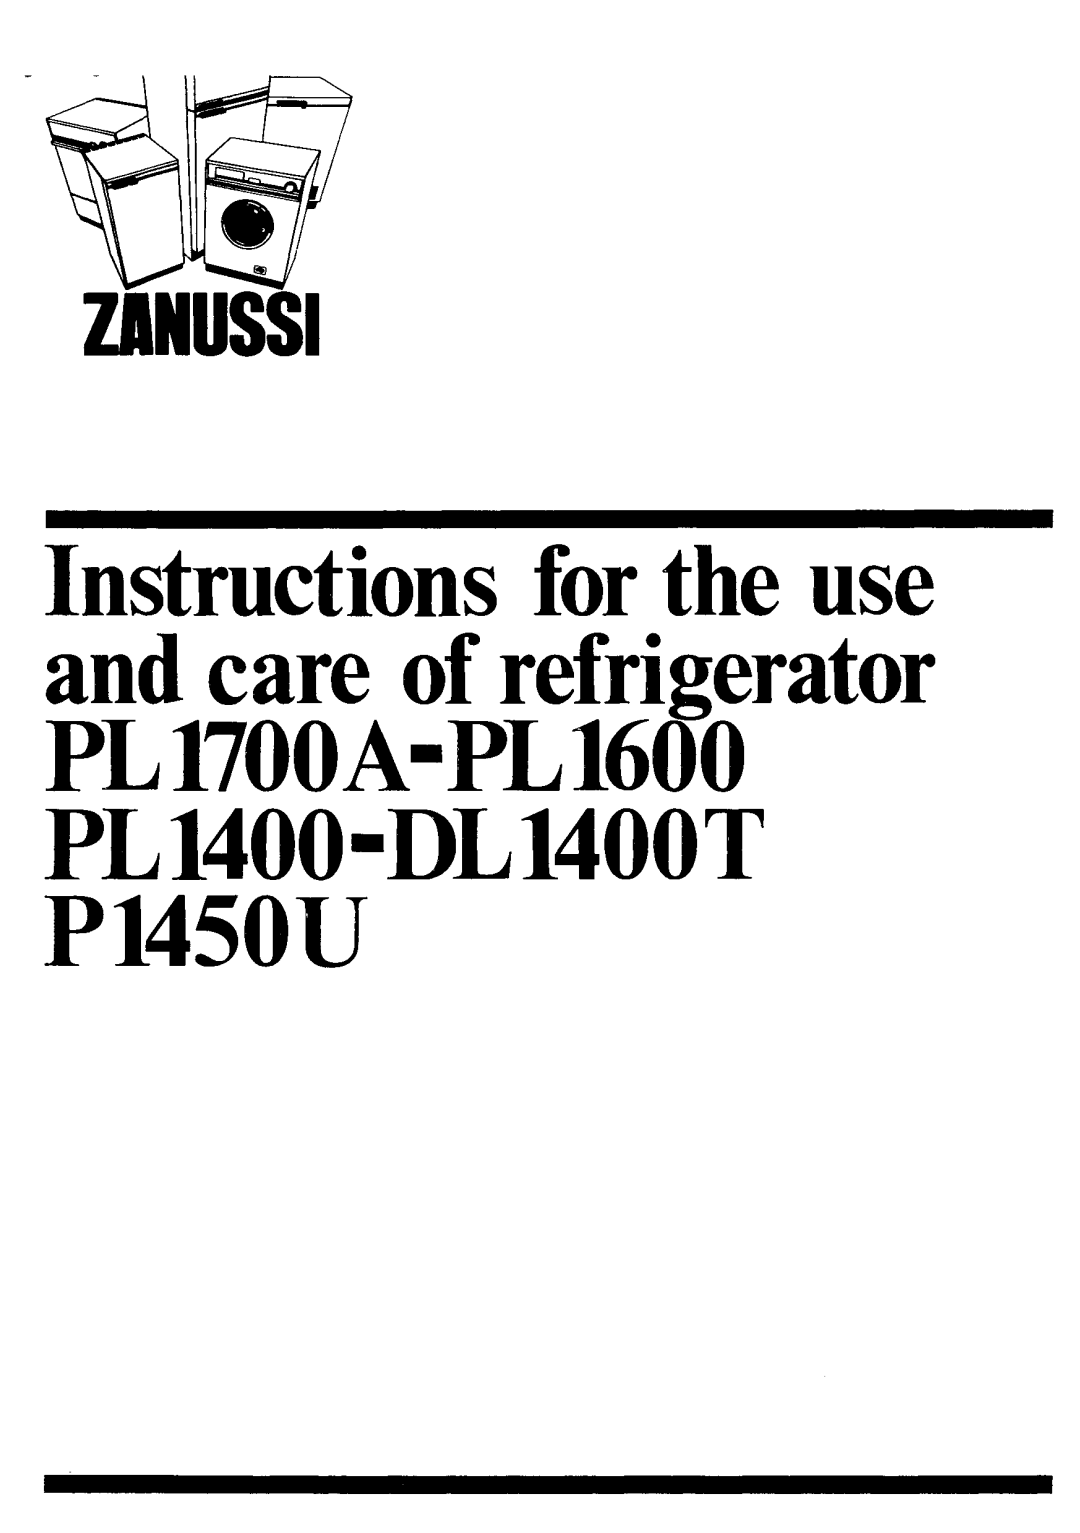 Zanussi PL 1400, DL 1400T, PL 1600, P1450 U, PL 1700A manual 